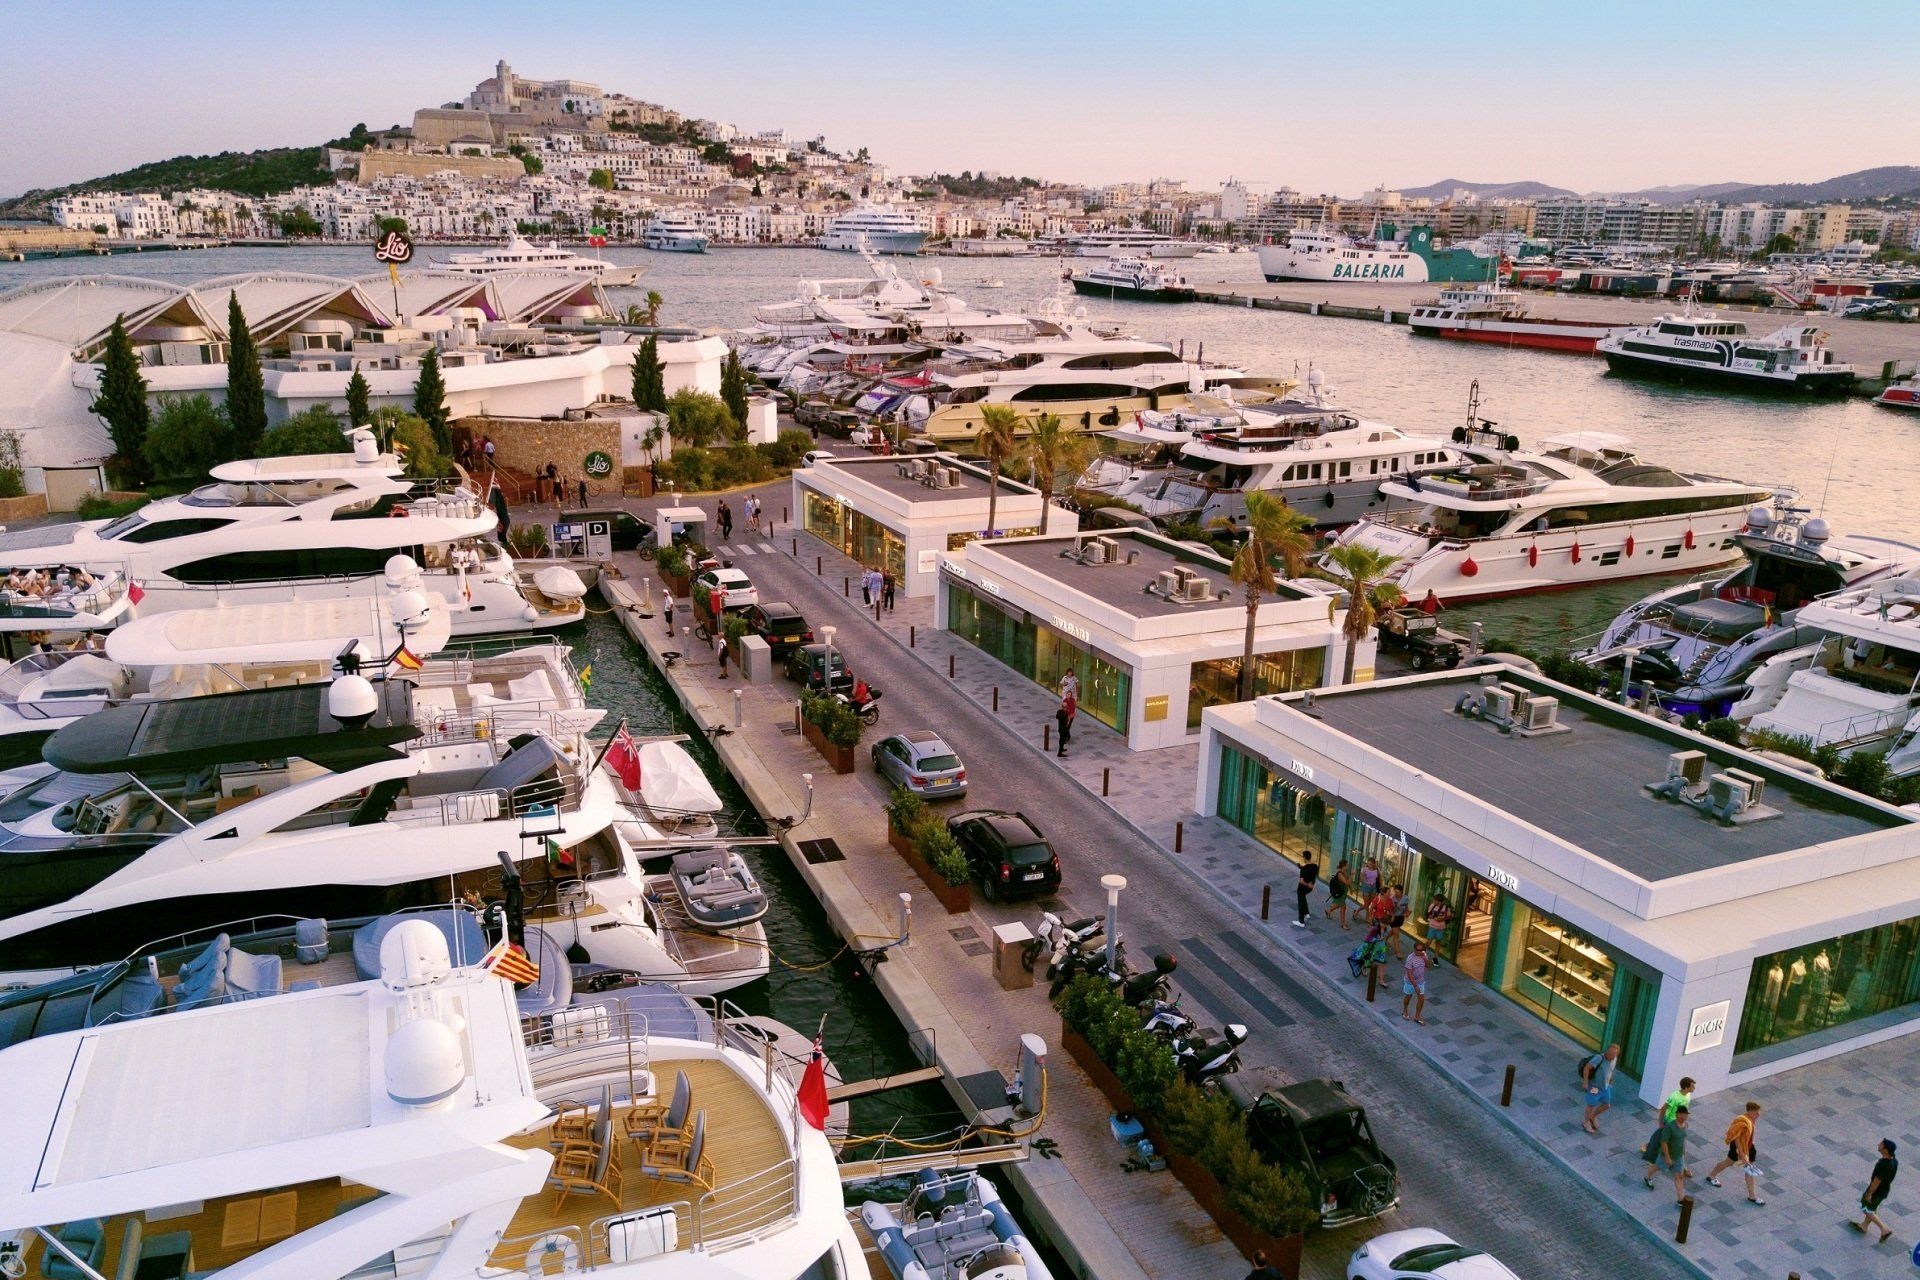 Picture of Marina Ibiza with many yachts